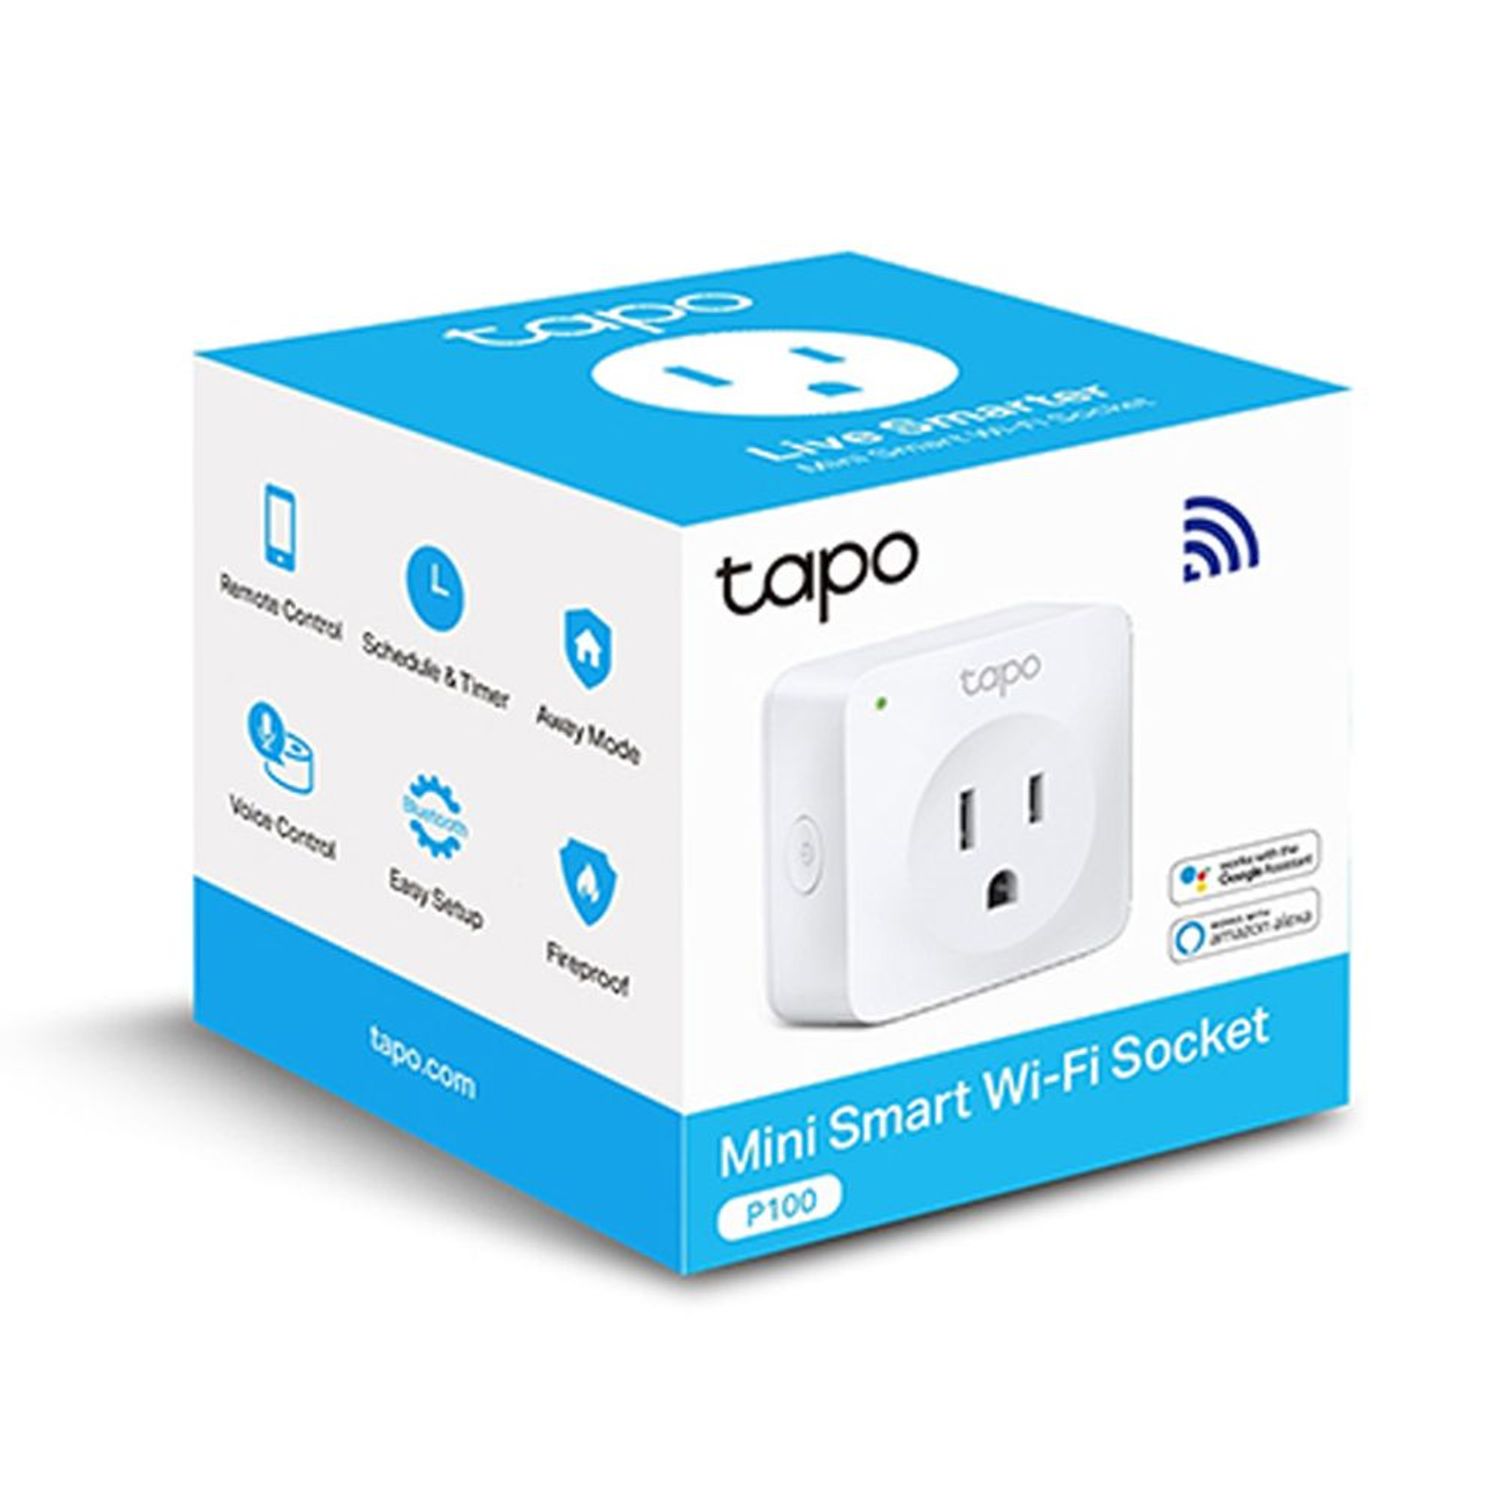 Mini Enchufe Smart WiFi TP Link Tapo P100 Bluetooth 4.2 Original y Garantia  I Oechsle - Oechsle